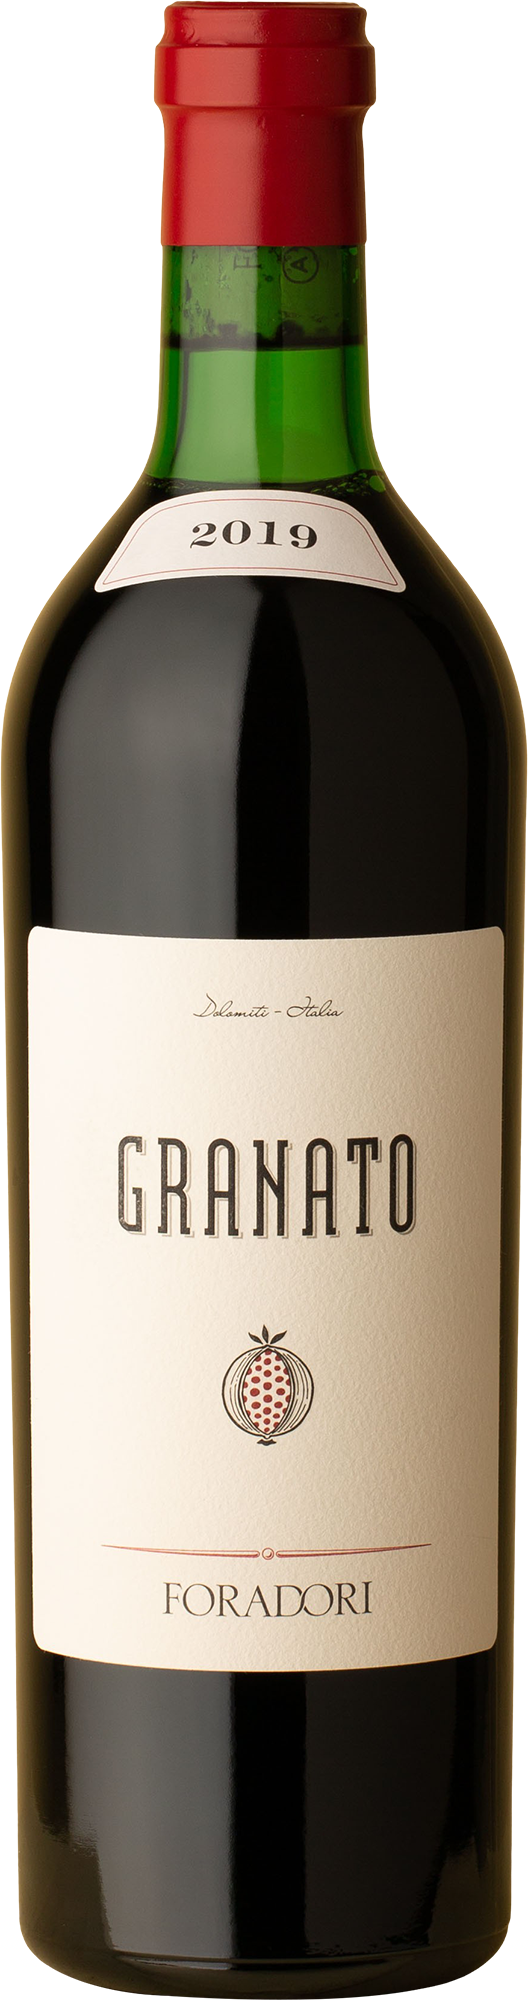 Foradori - Granato Teroldego 2019 Red Wine